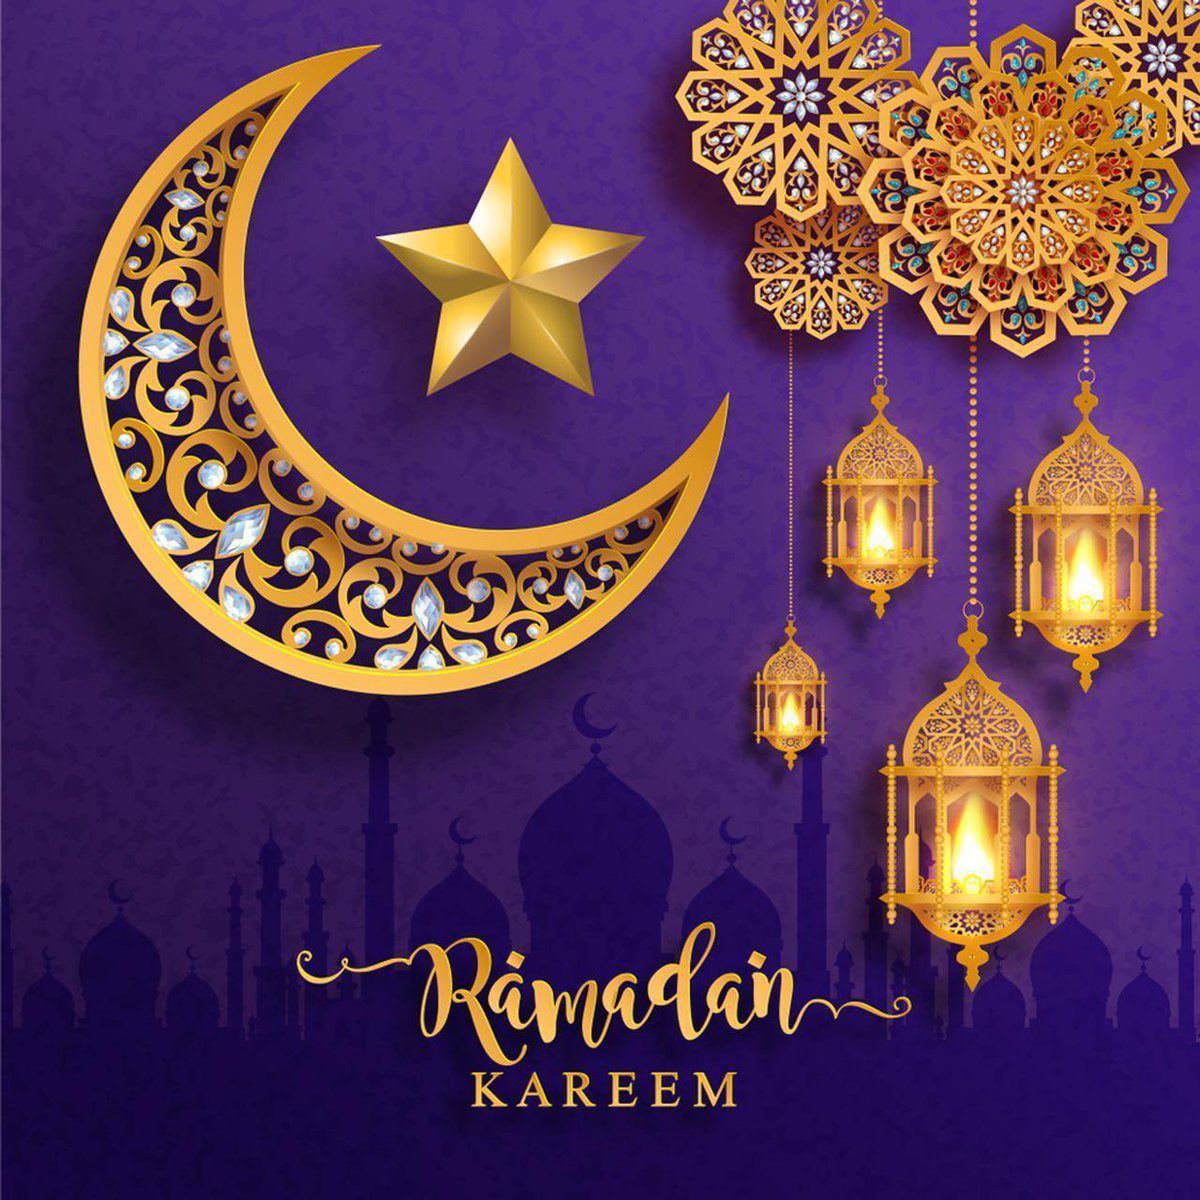 Ramadan Kareem brothers and sisters. I feel so happy to be celebrating my first Ramadan since reverting to Islam #firstRamadan #Ramadan #MuslimRevert